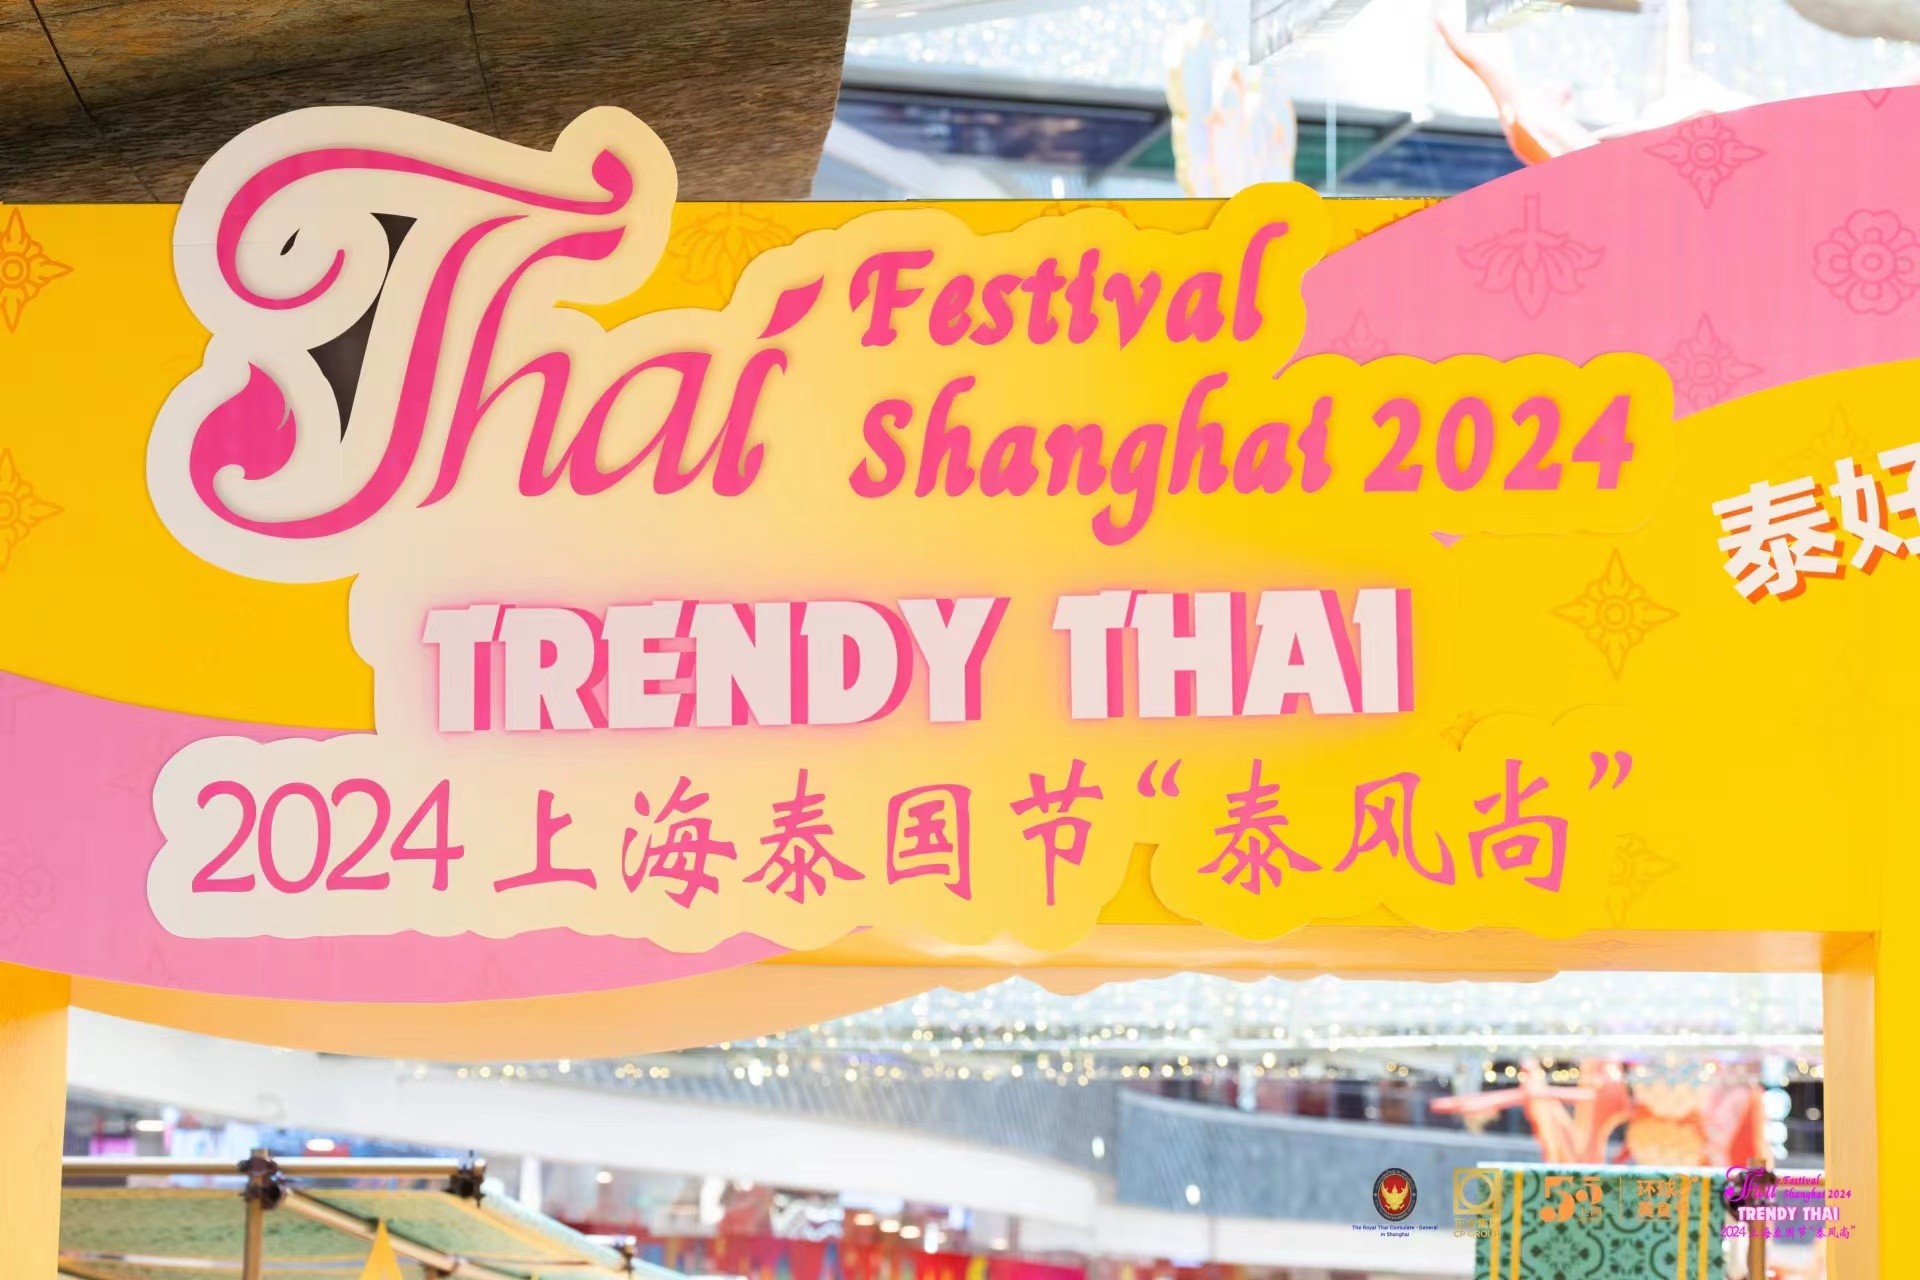 'Trendy Thai' Thai Festival 2024 in Shanghai Opens